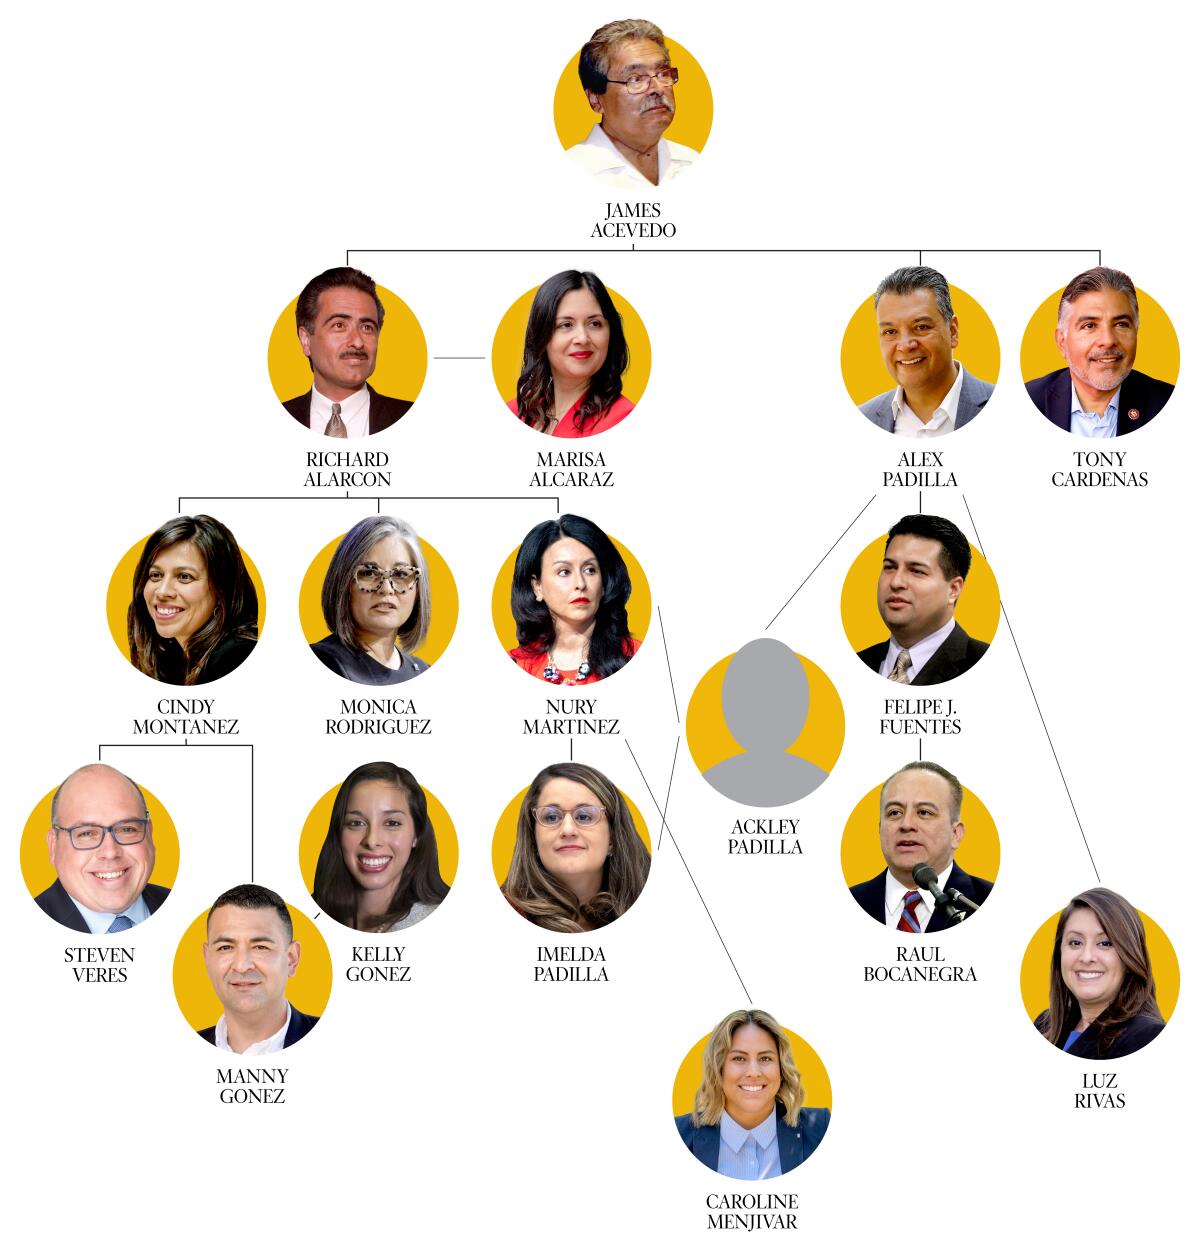 San Fernando Valley Latino politicians family tree with James Acevedo at top.